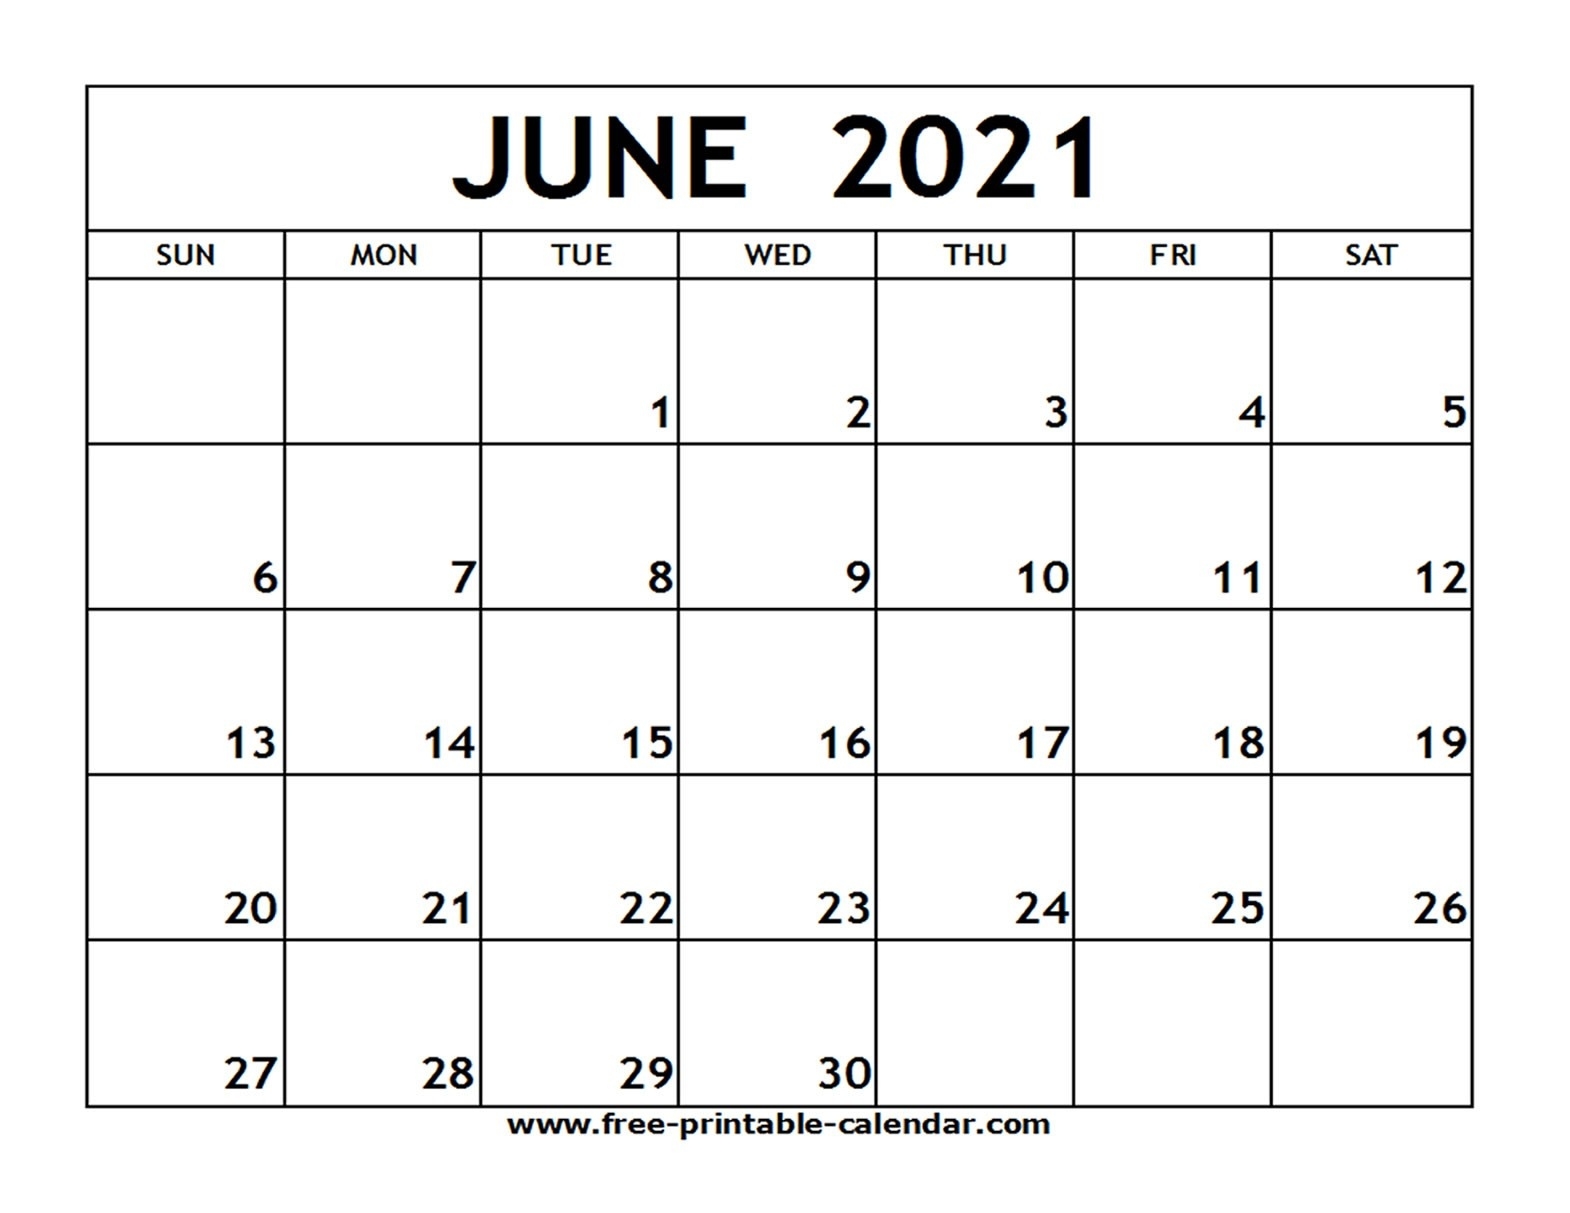 Editable June 2021 Calendar | Free Printable Calendar Monthly Show Me A Calendar Of June 2021